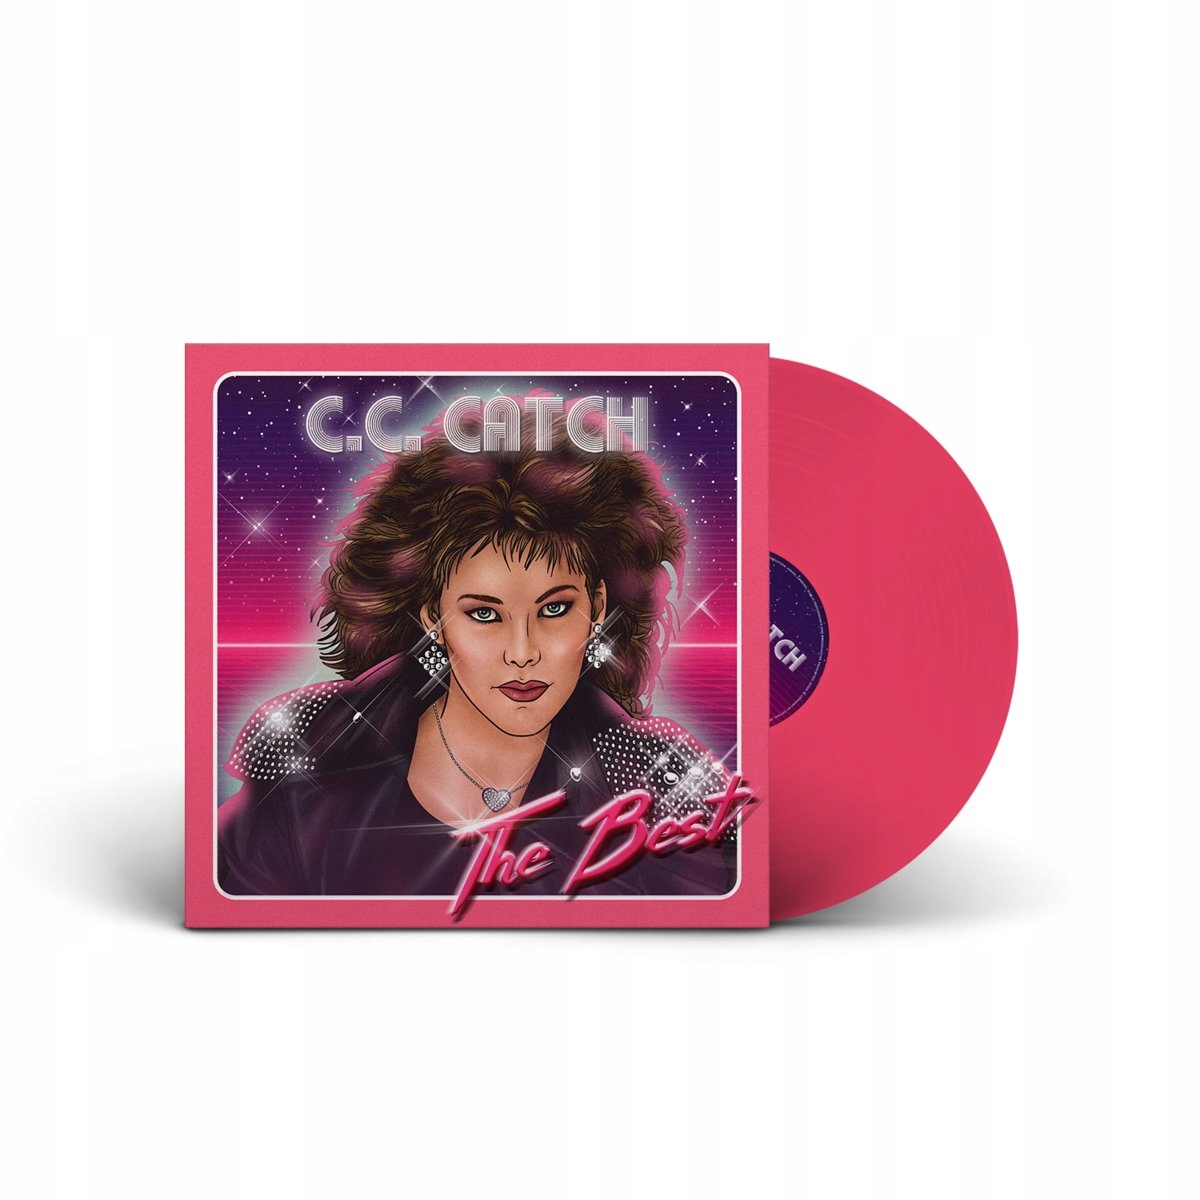 C.C. Catch - The Best (Pink Vinyl)